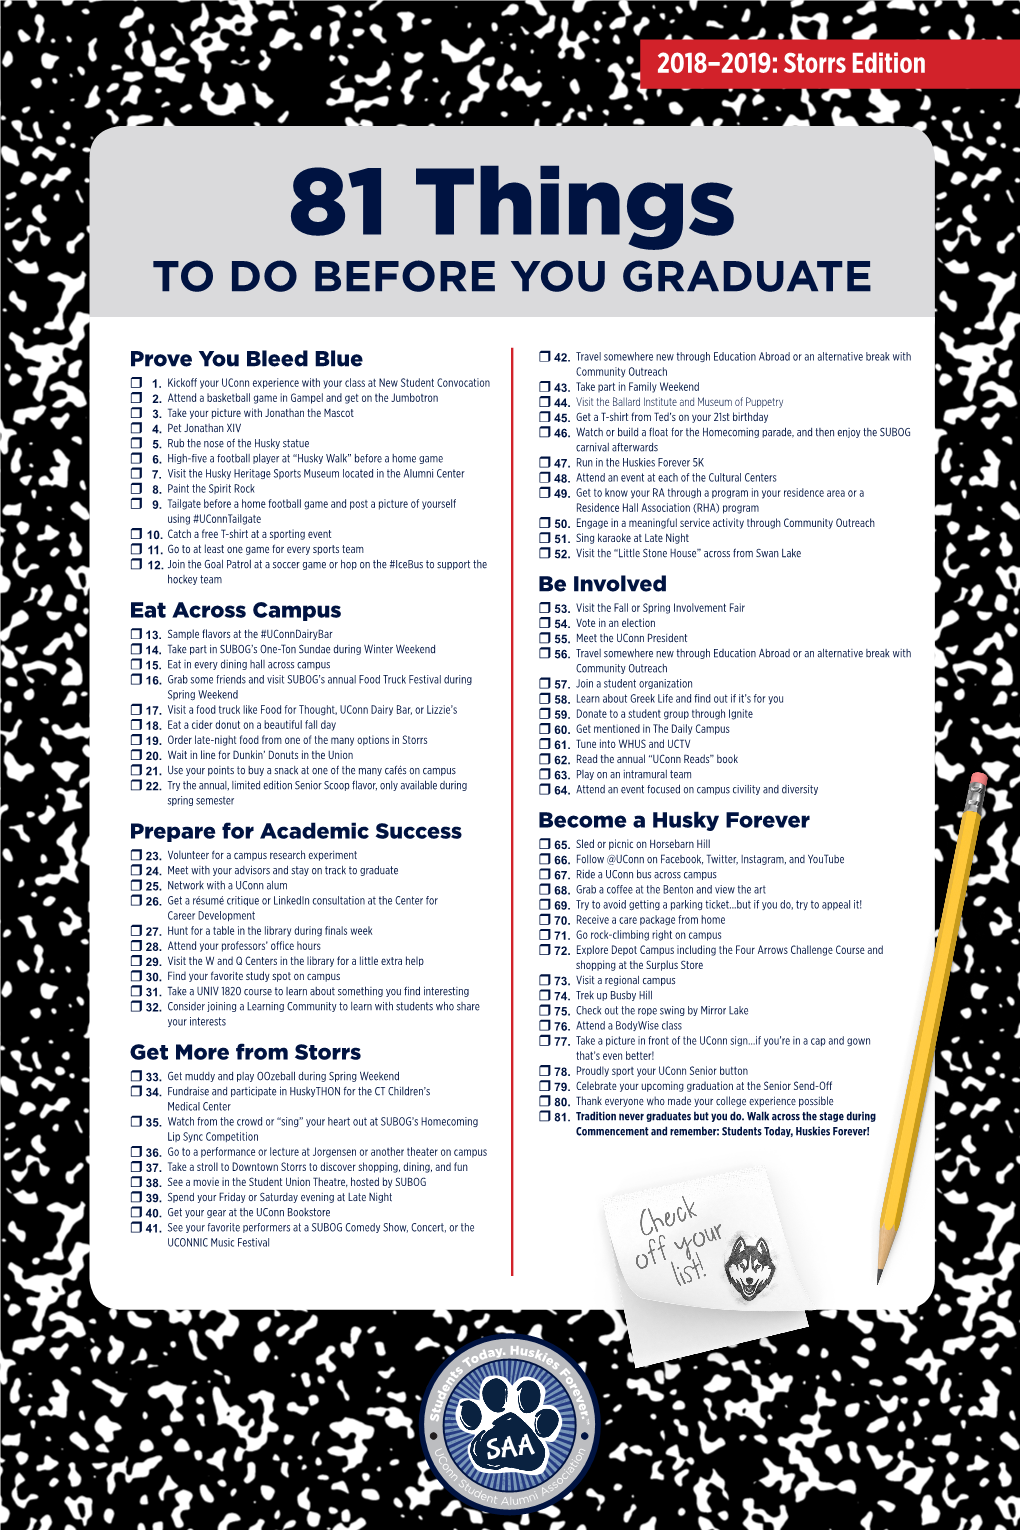 To Do Before You Graduate